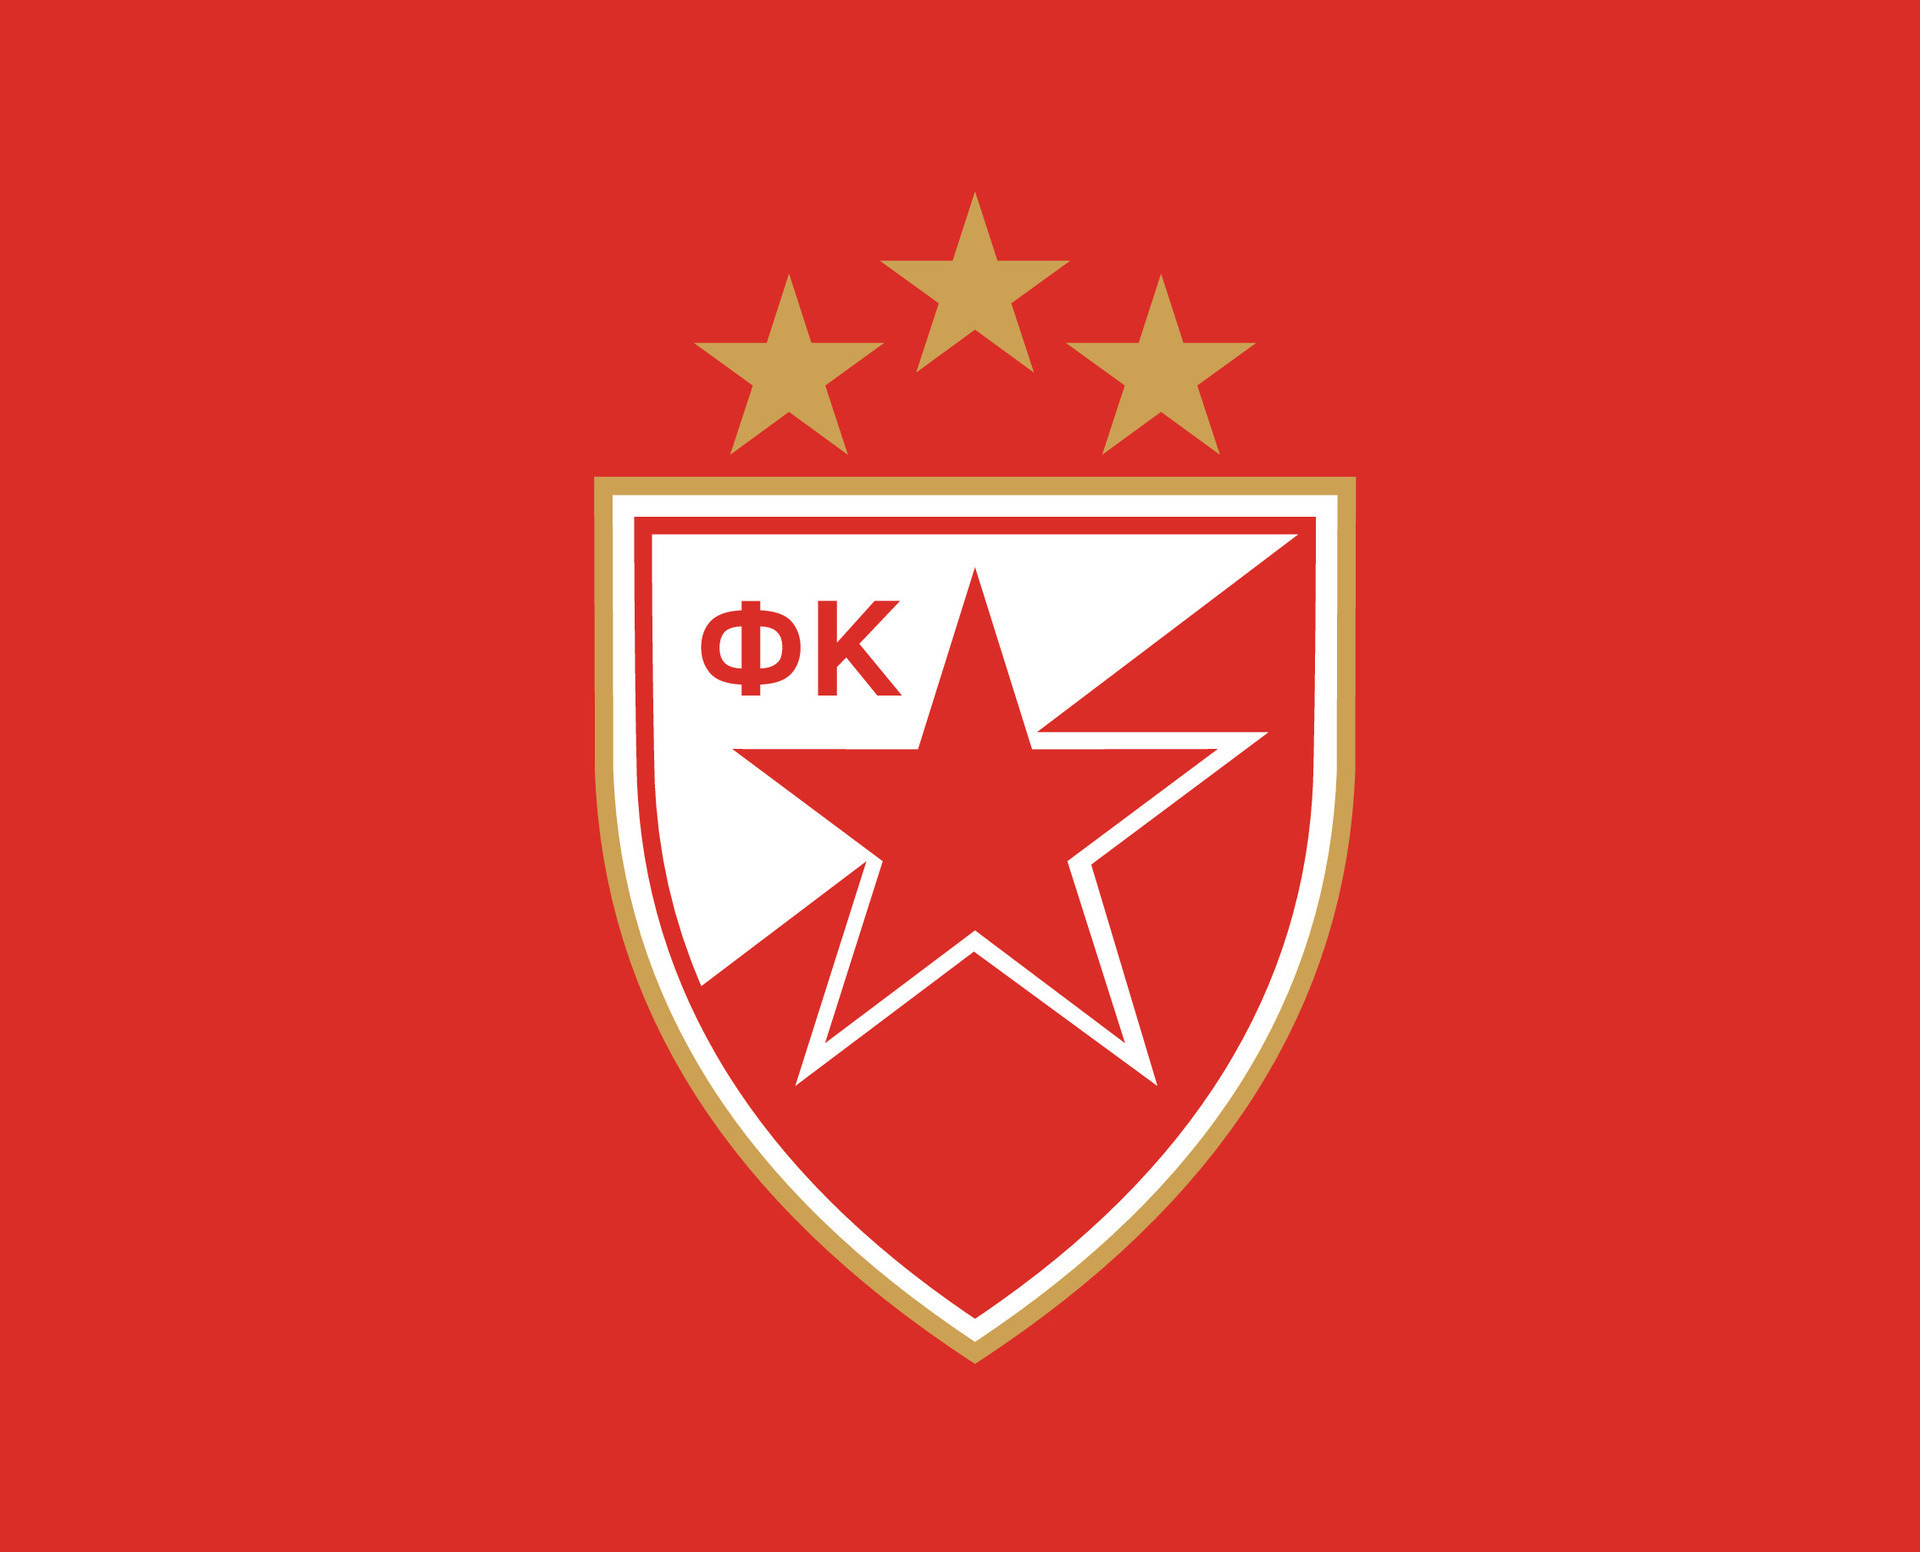 Crvena Zvezda Club Symbol Logo Black Serbia League Football Abstract Design  Vector Illustration 30881210 Vector Art at Vecteezy